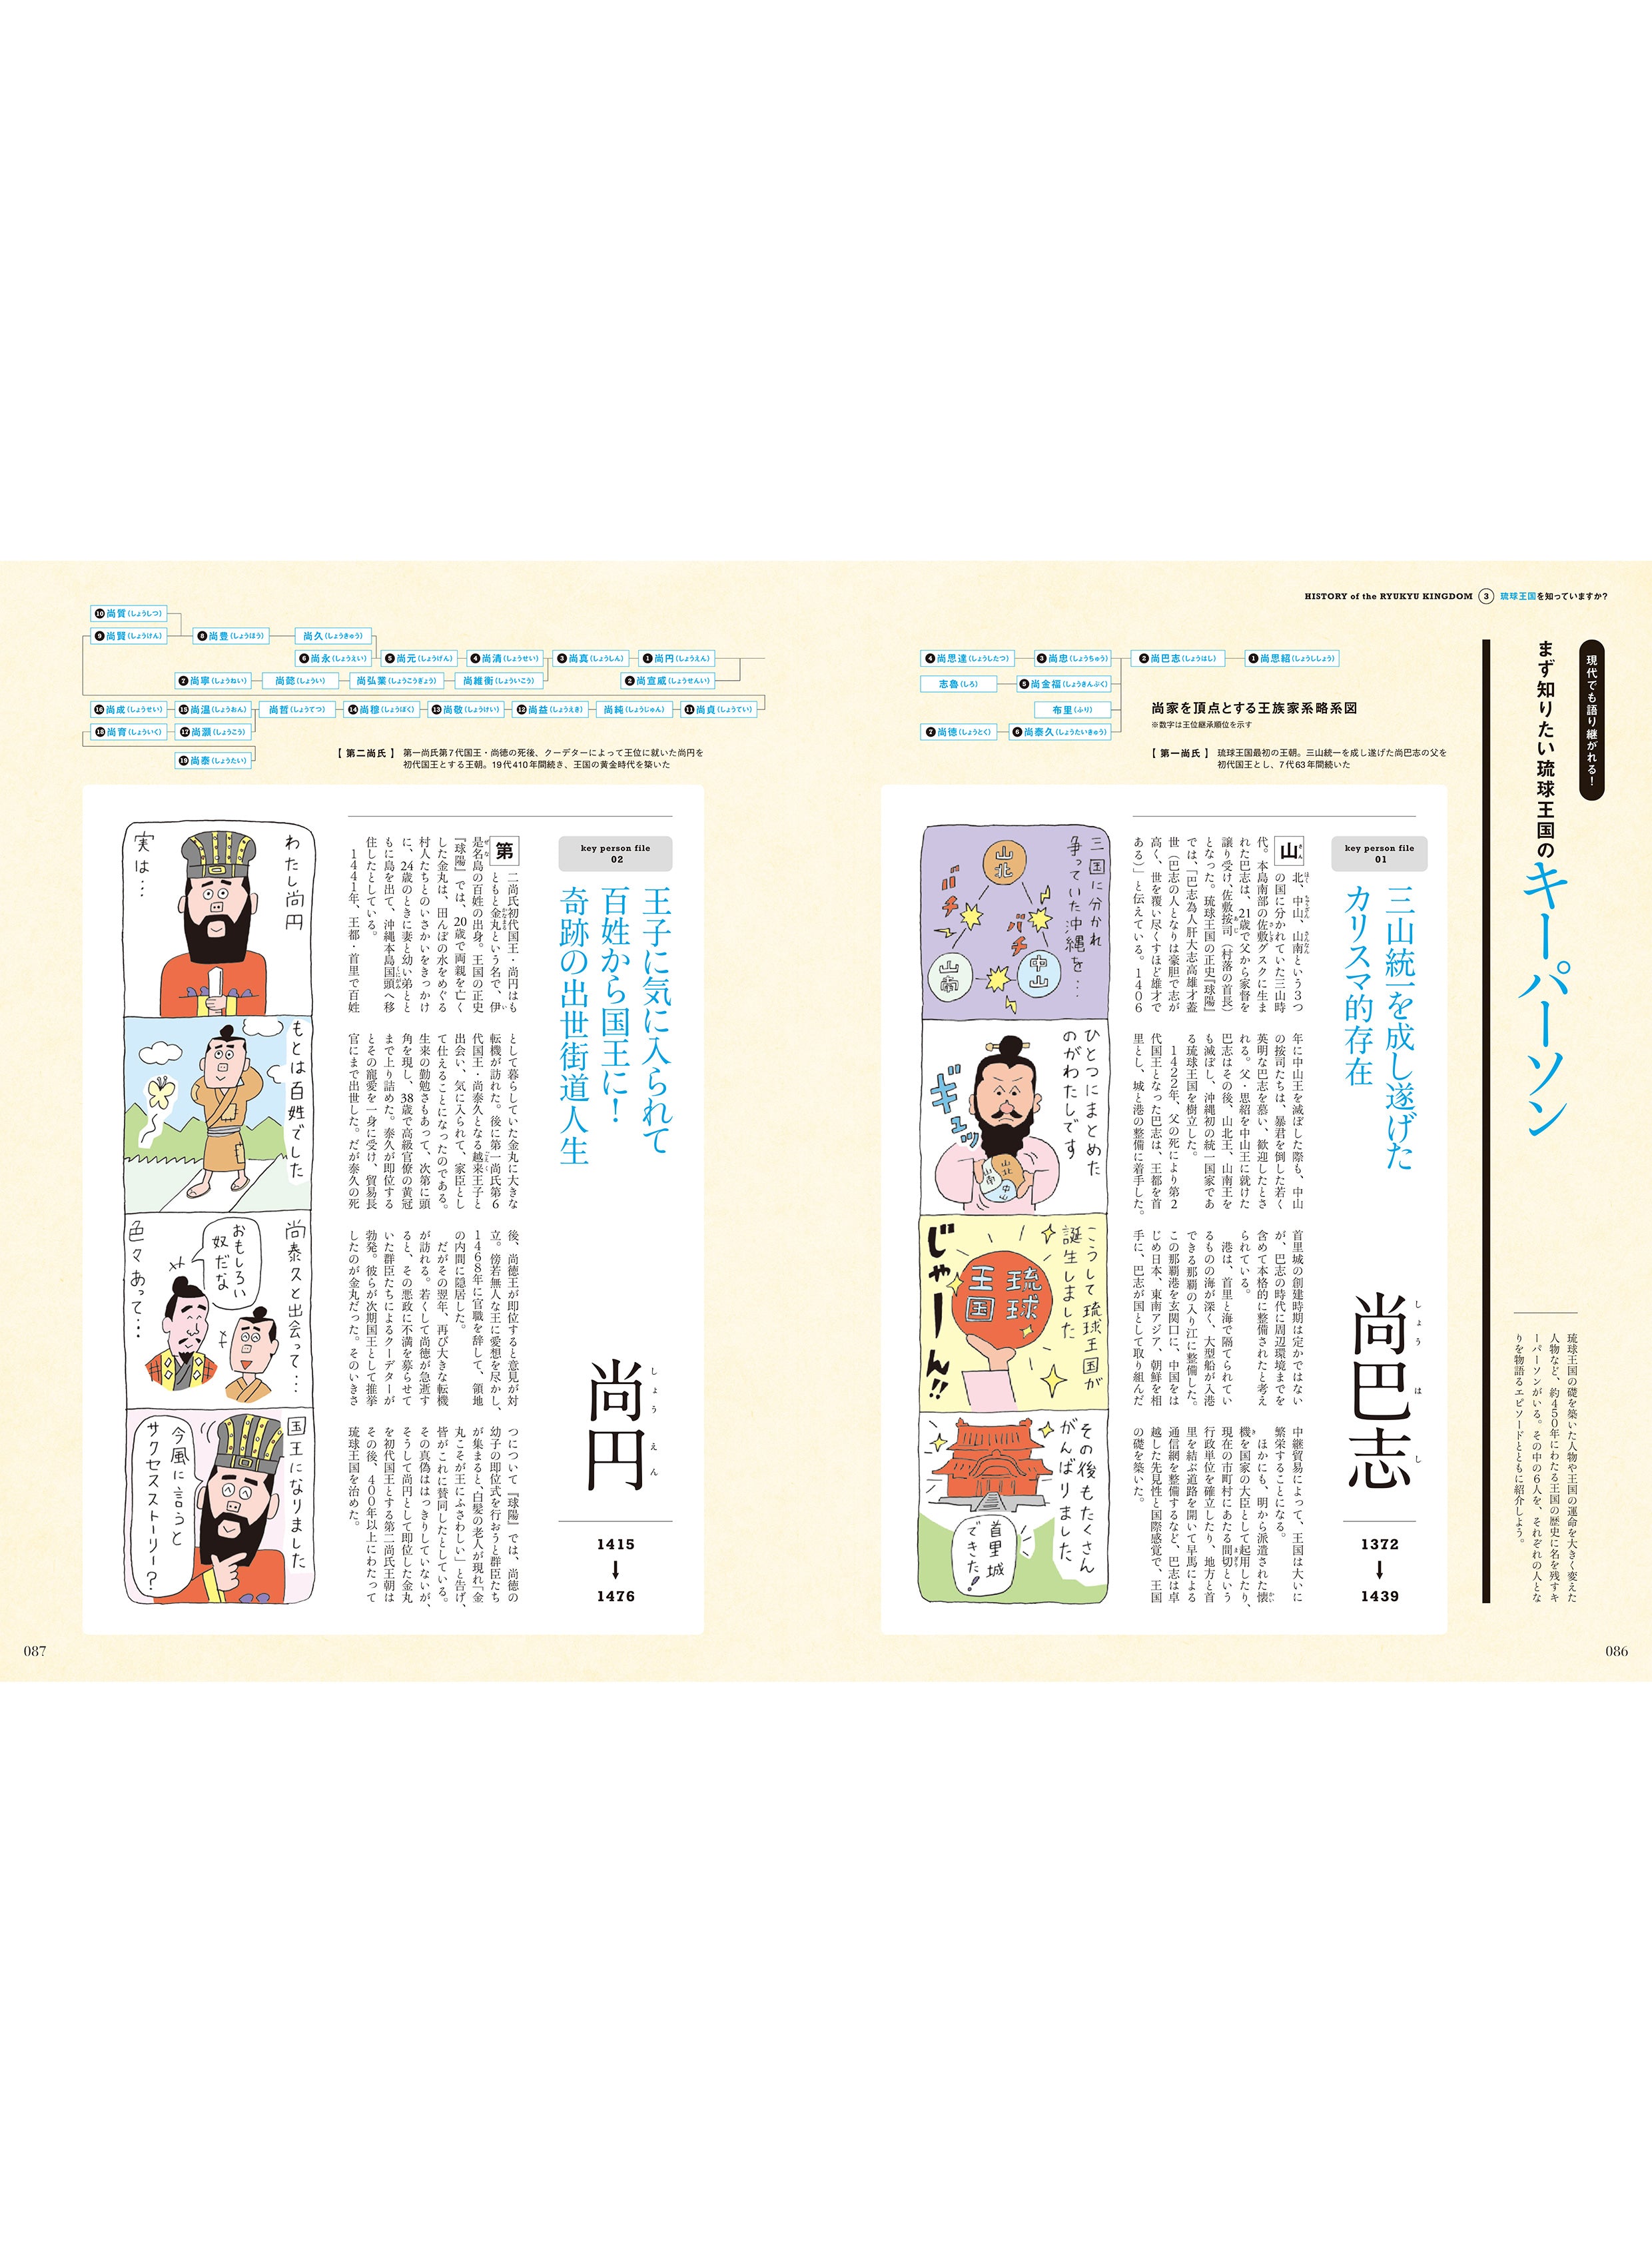 Discover Japan 2022年7月号「沖縄にときめく／約450年続いた琉球王国の秘密」2022/6/6発売